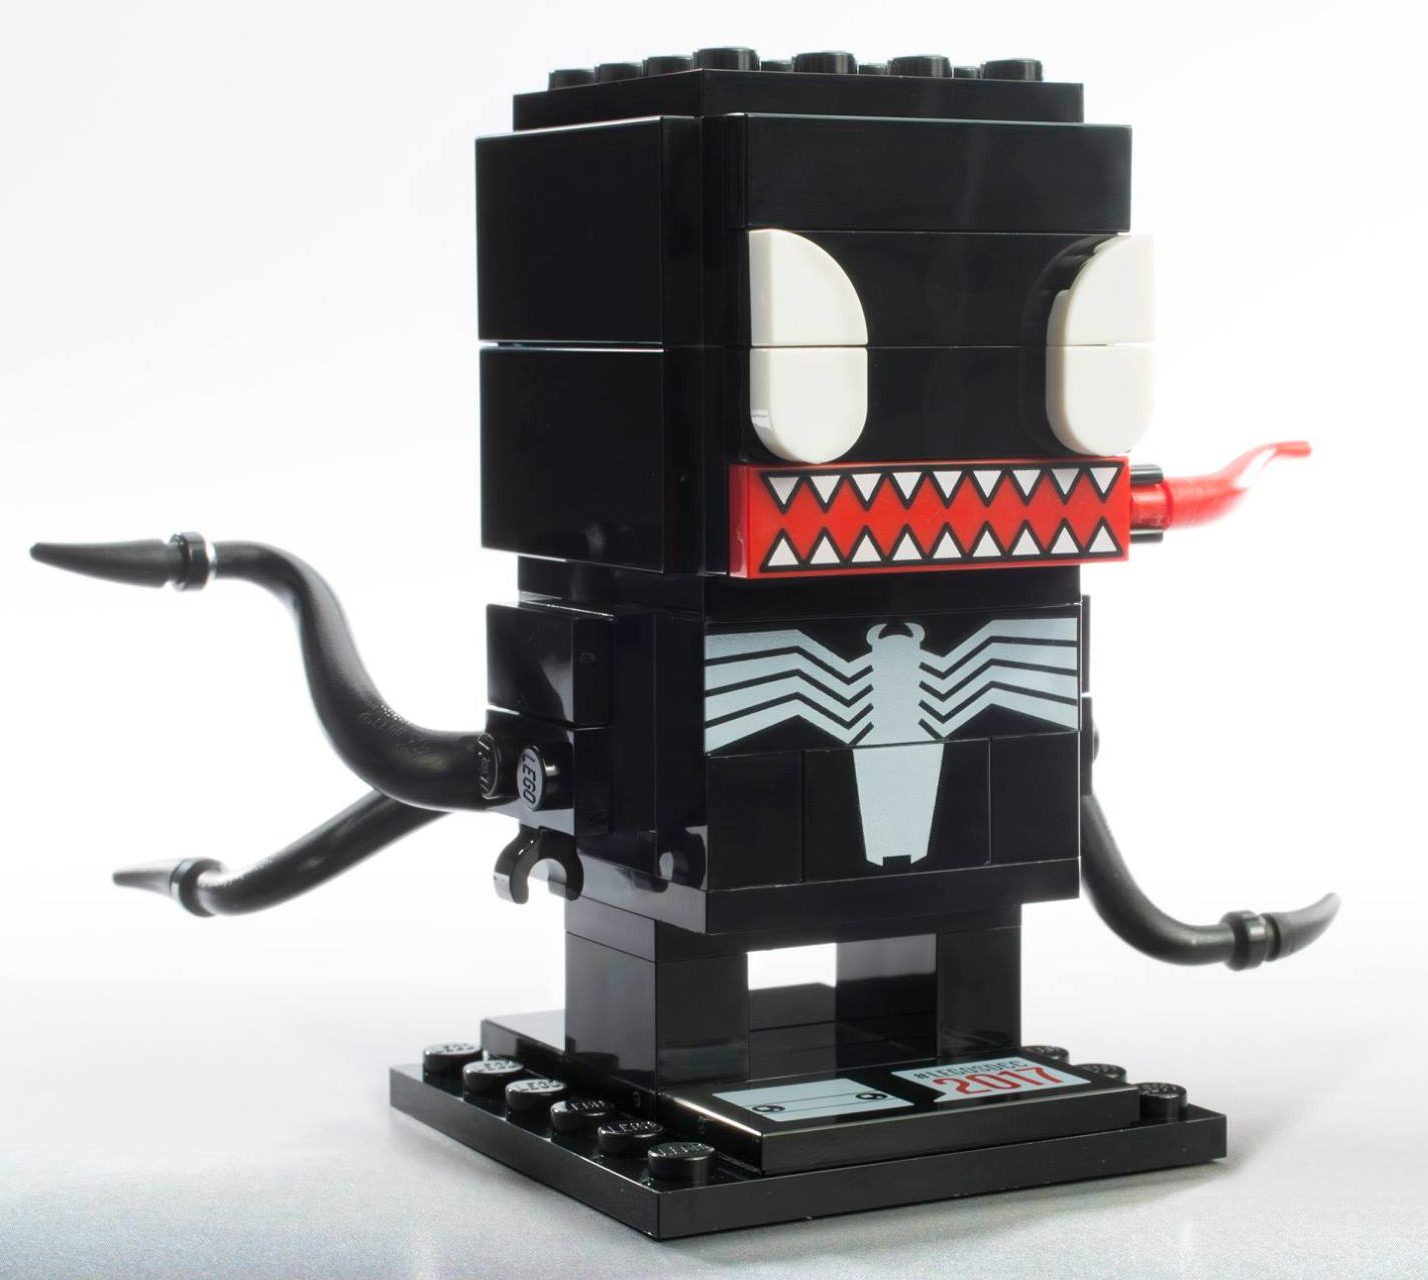 SDCC 2017 Exclusive LEGO SpiderMan & Venom BrickHeadz